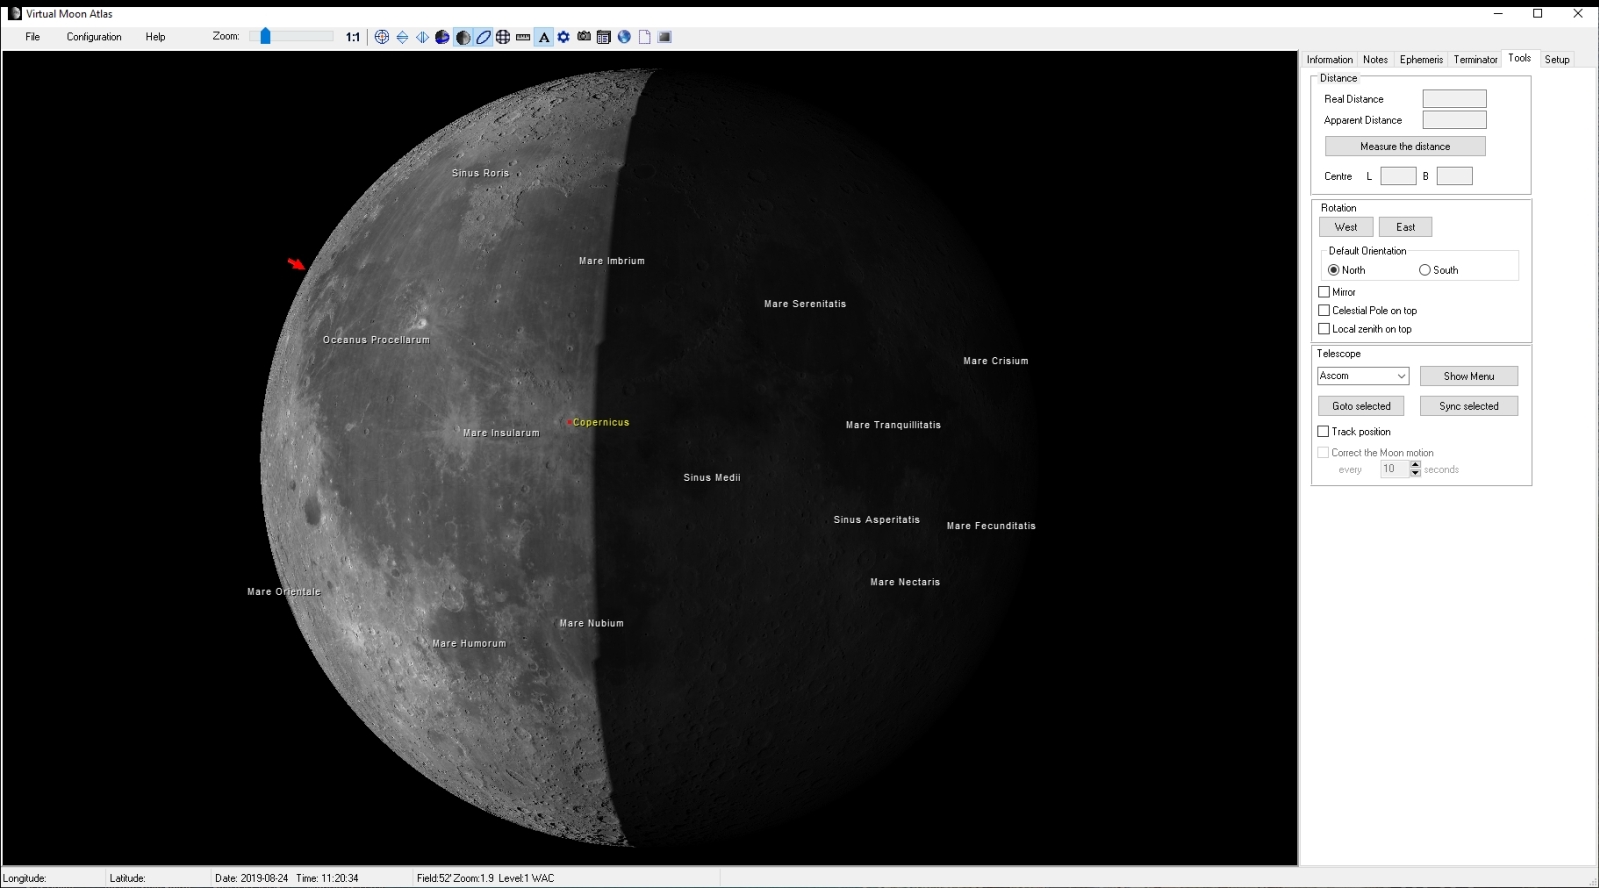 errors in virtual moon atlas